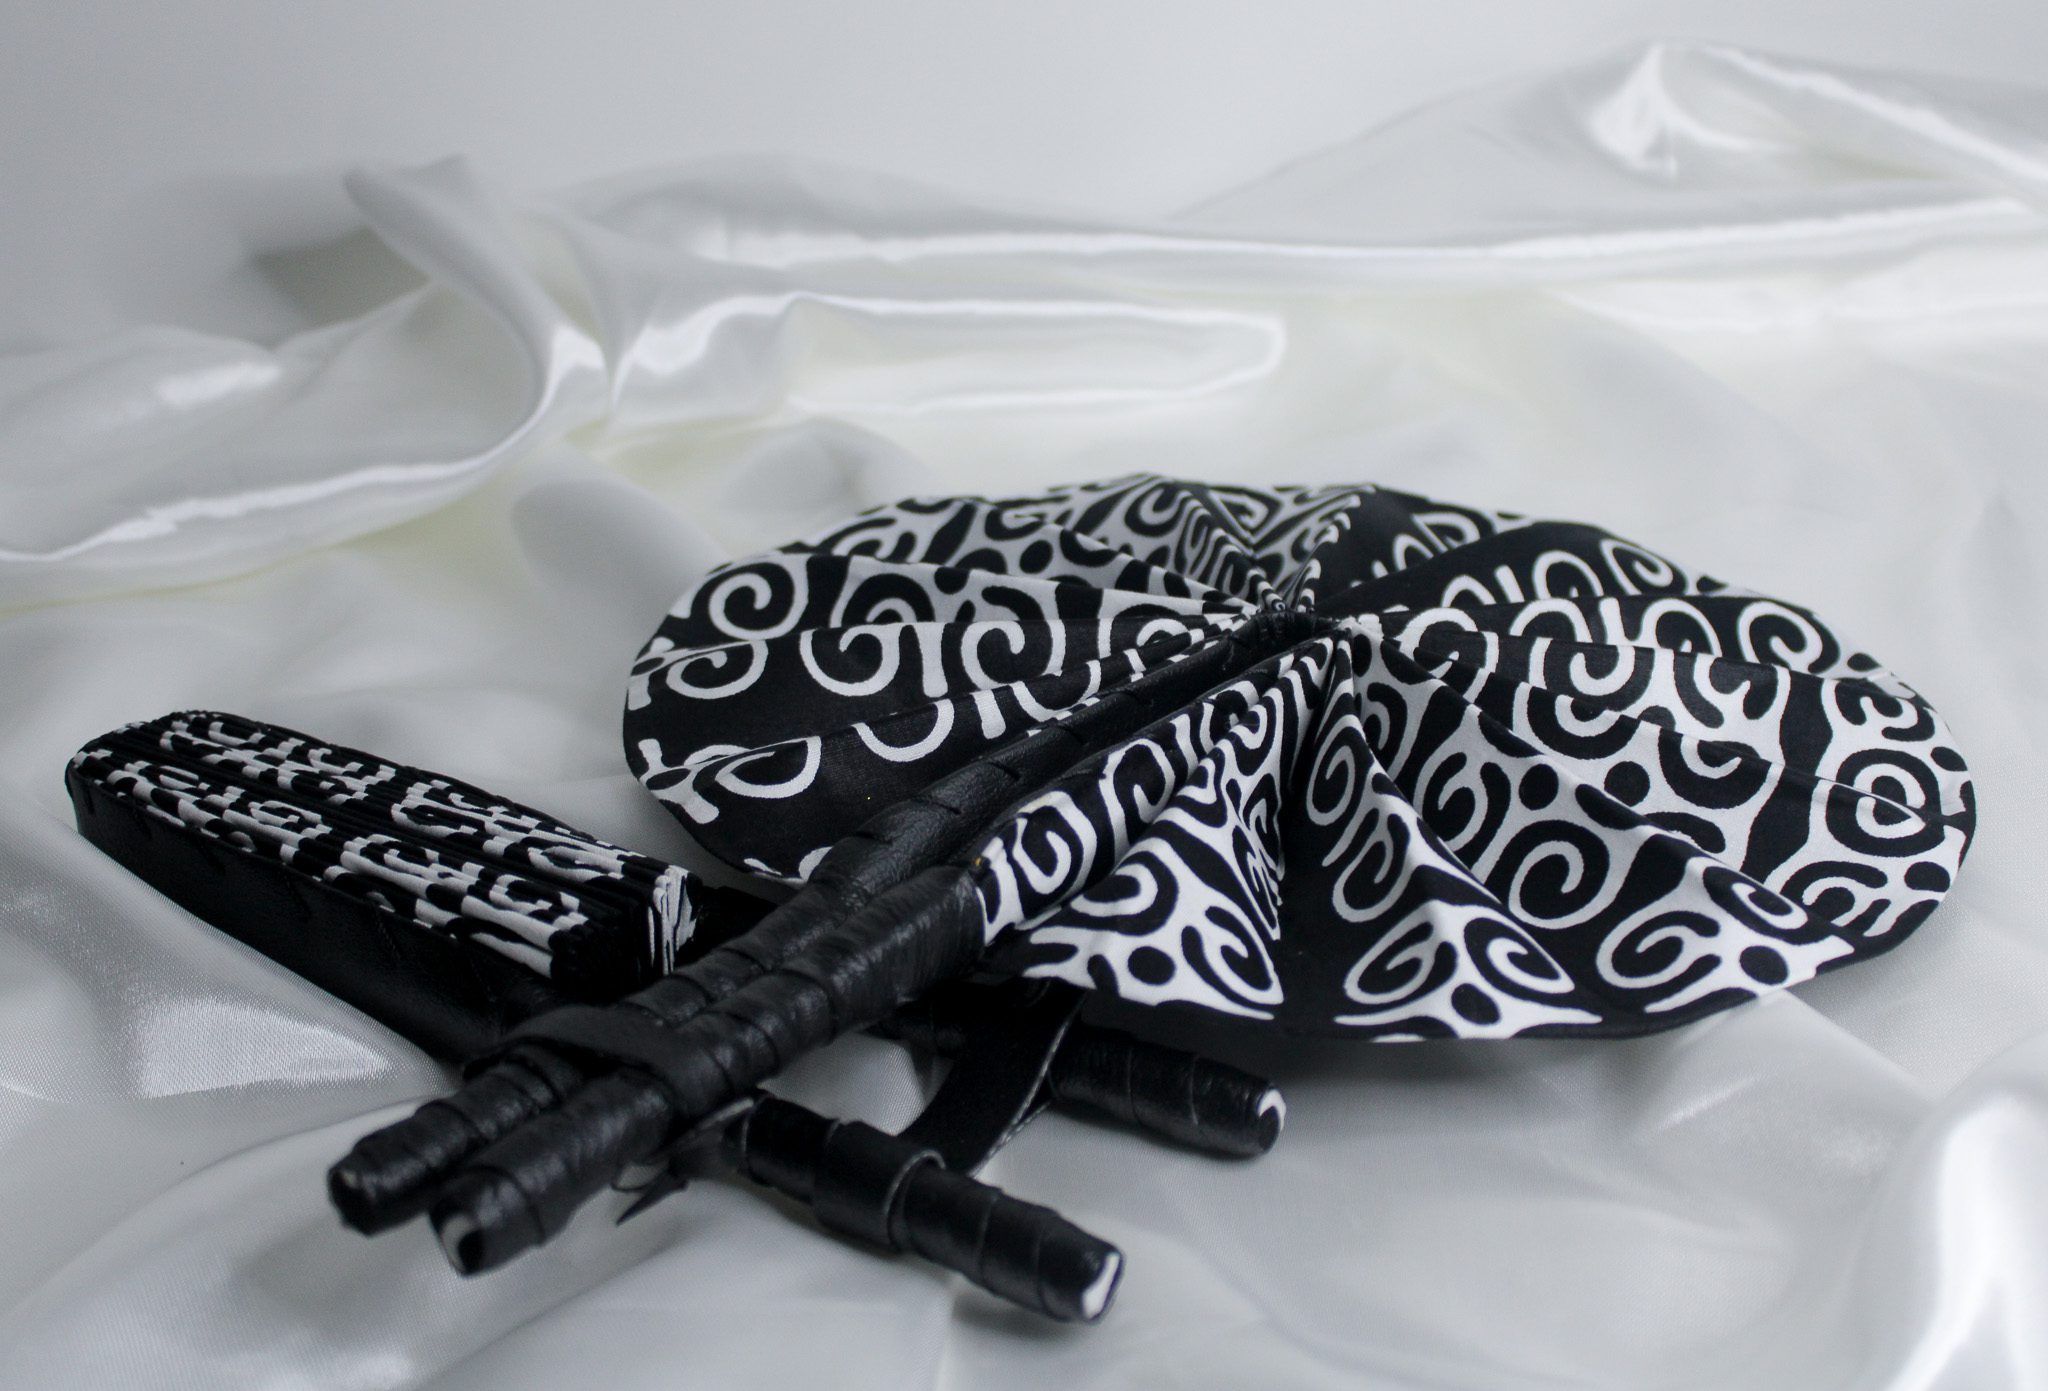 African Ankara Print Handheld Folding Fan - Black Swirl